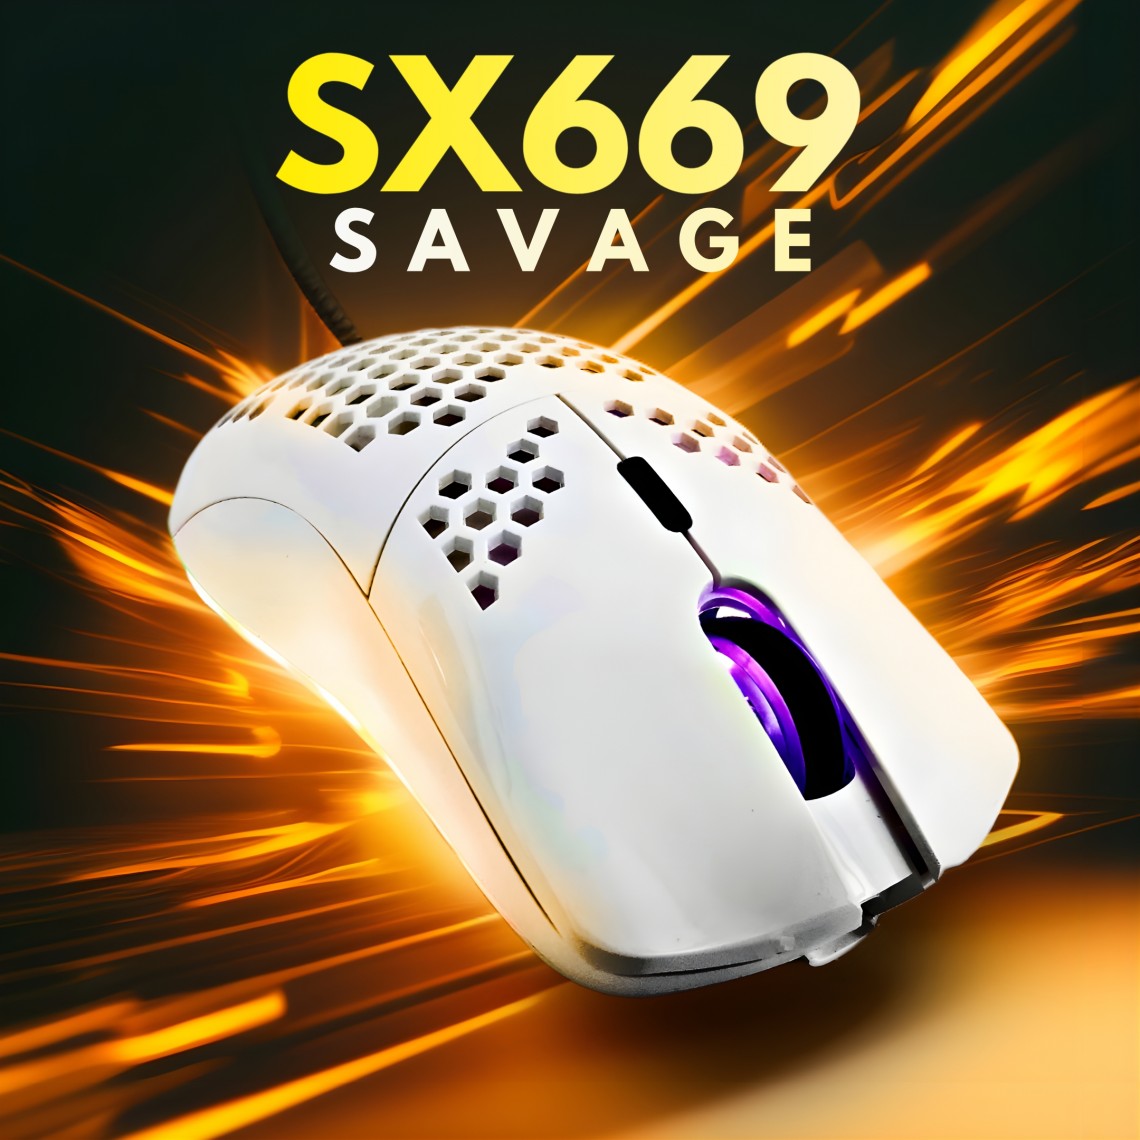 sx669